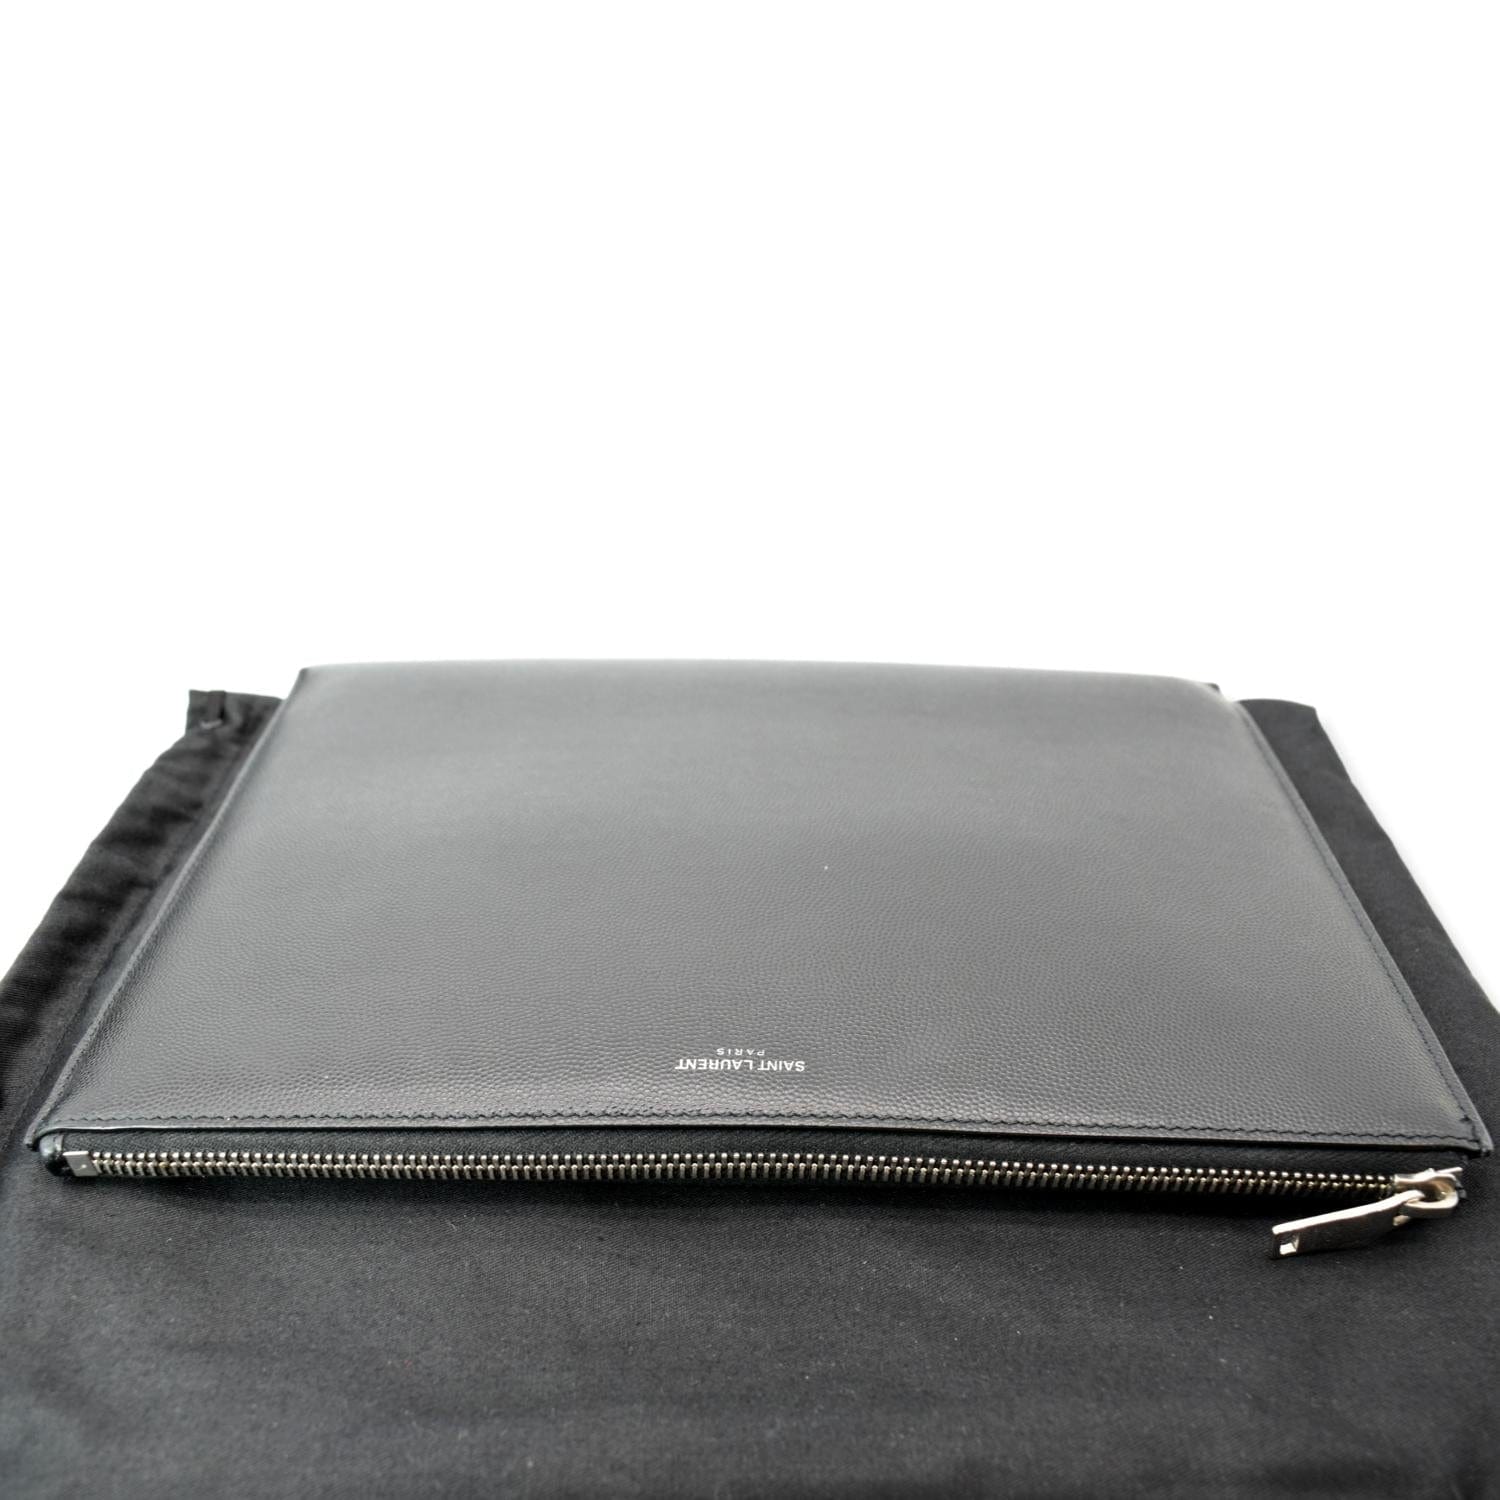 YSL Yves Saint Laurent Grain Black Patent Leather Passbook Holder